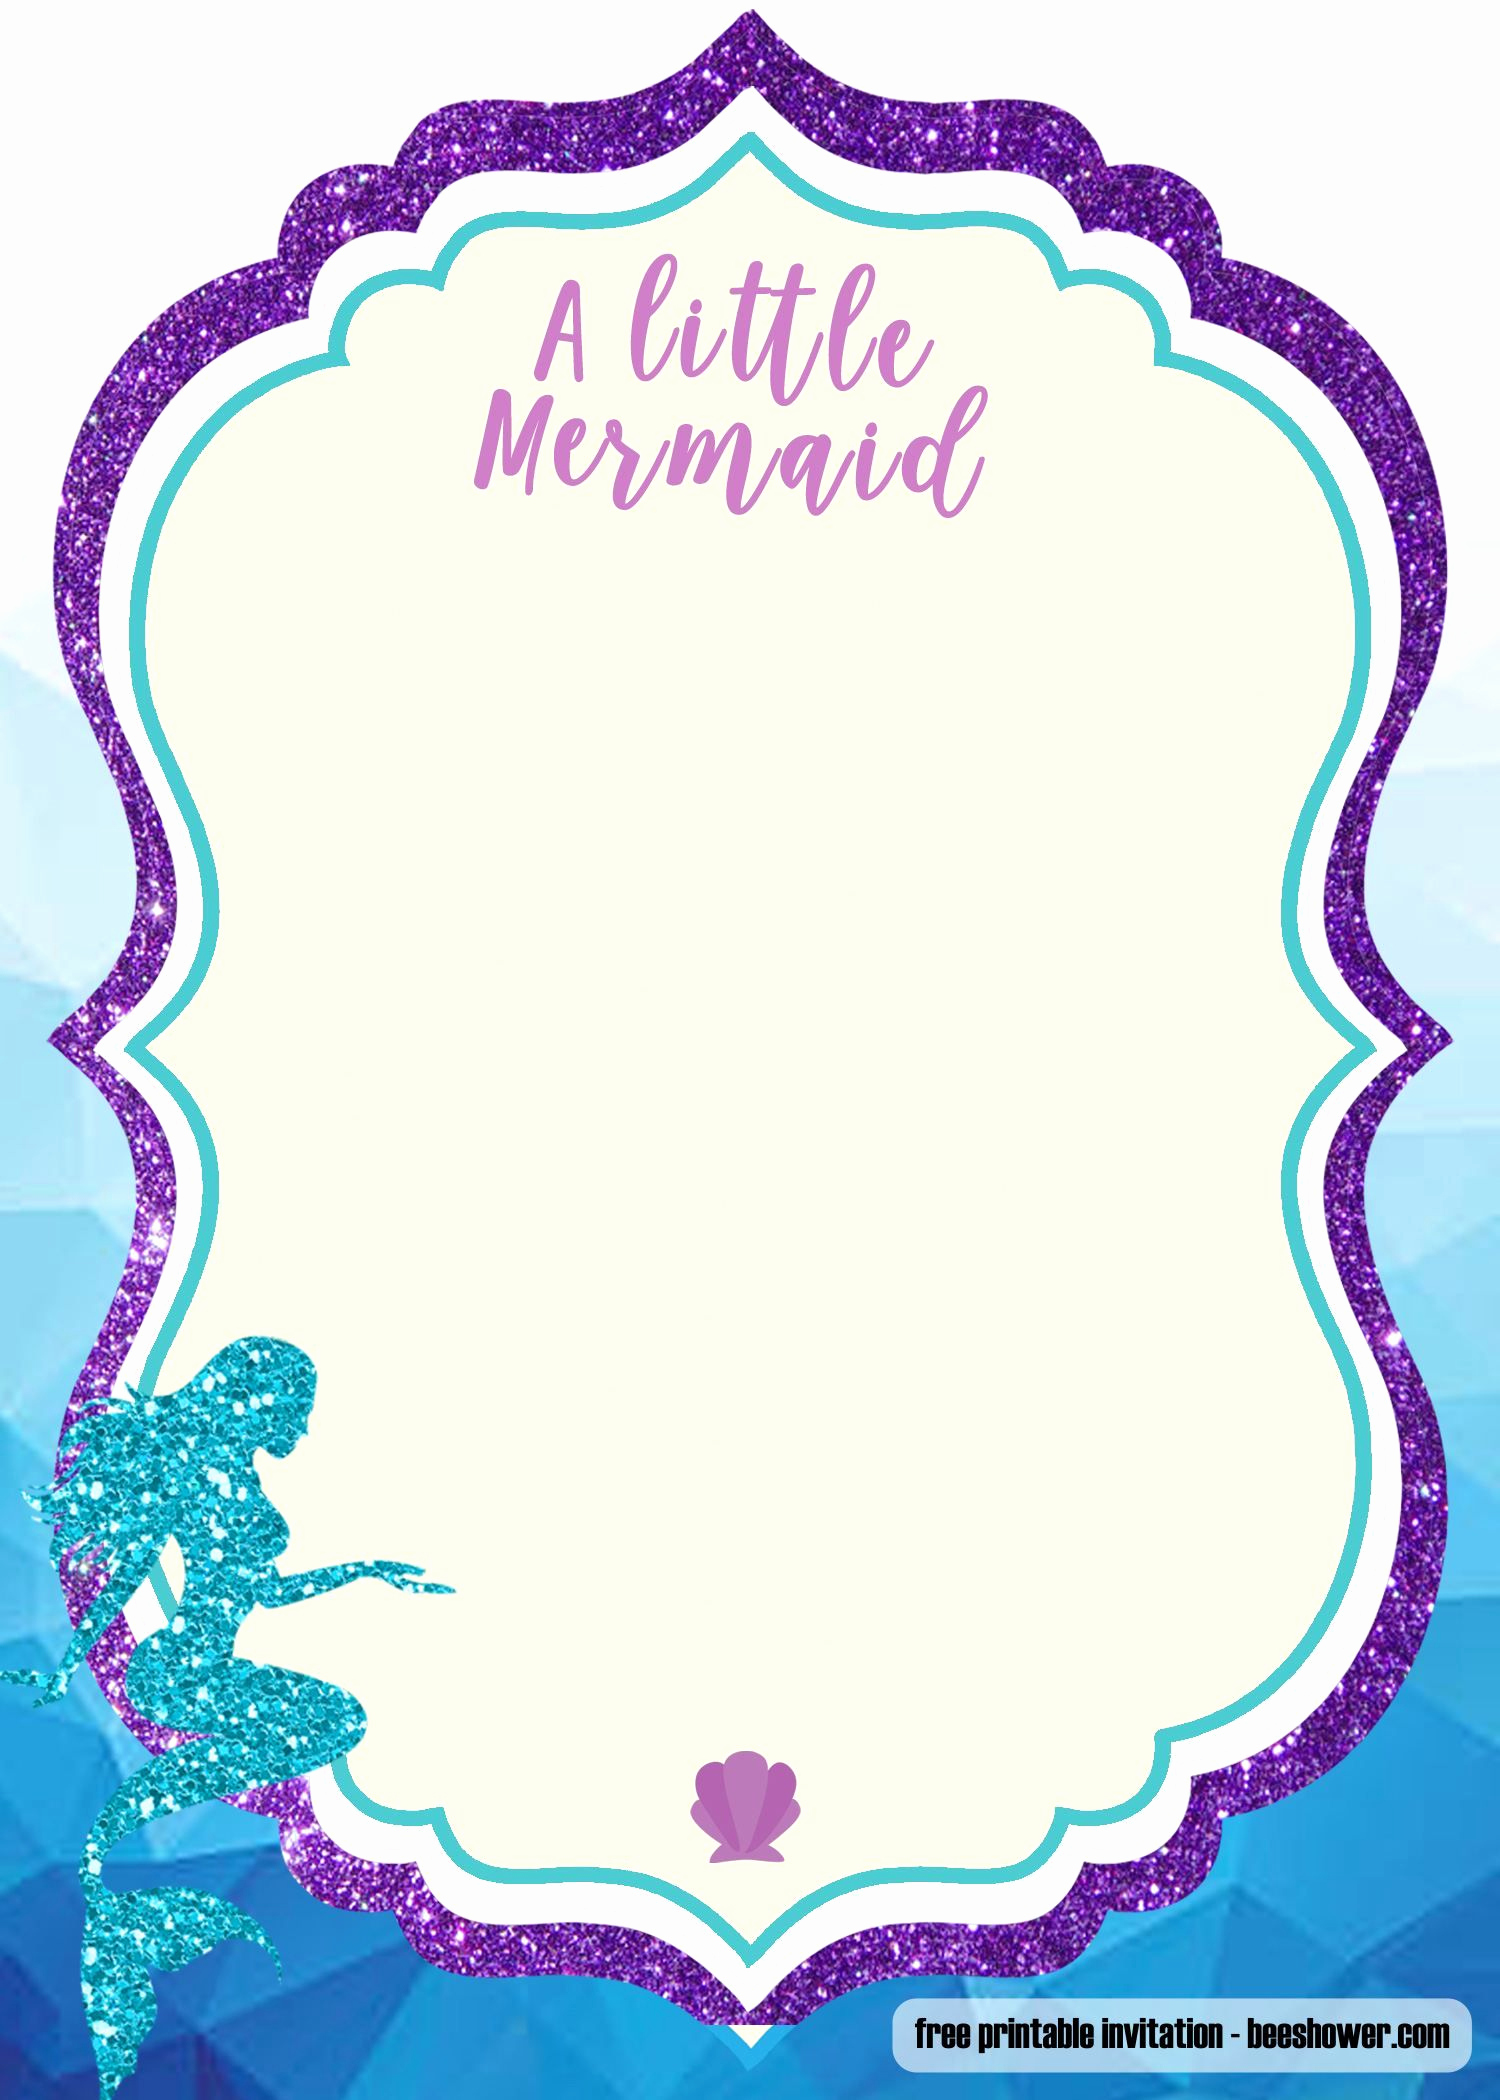 Mermaid Tail Template for Invitation Elegant Free Printable Mermaid Baby Shower Invitation